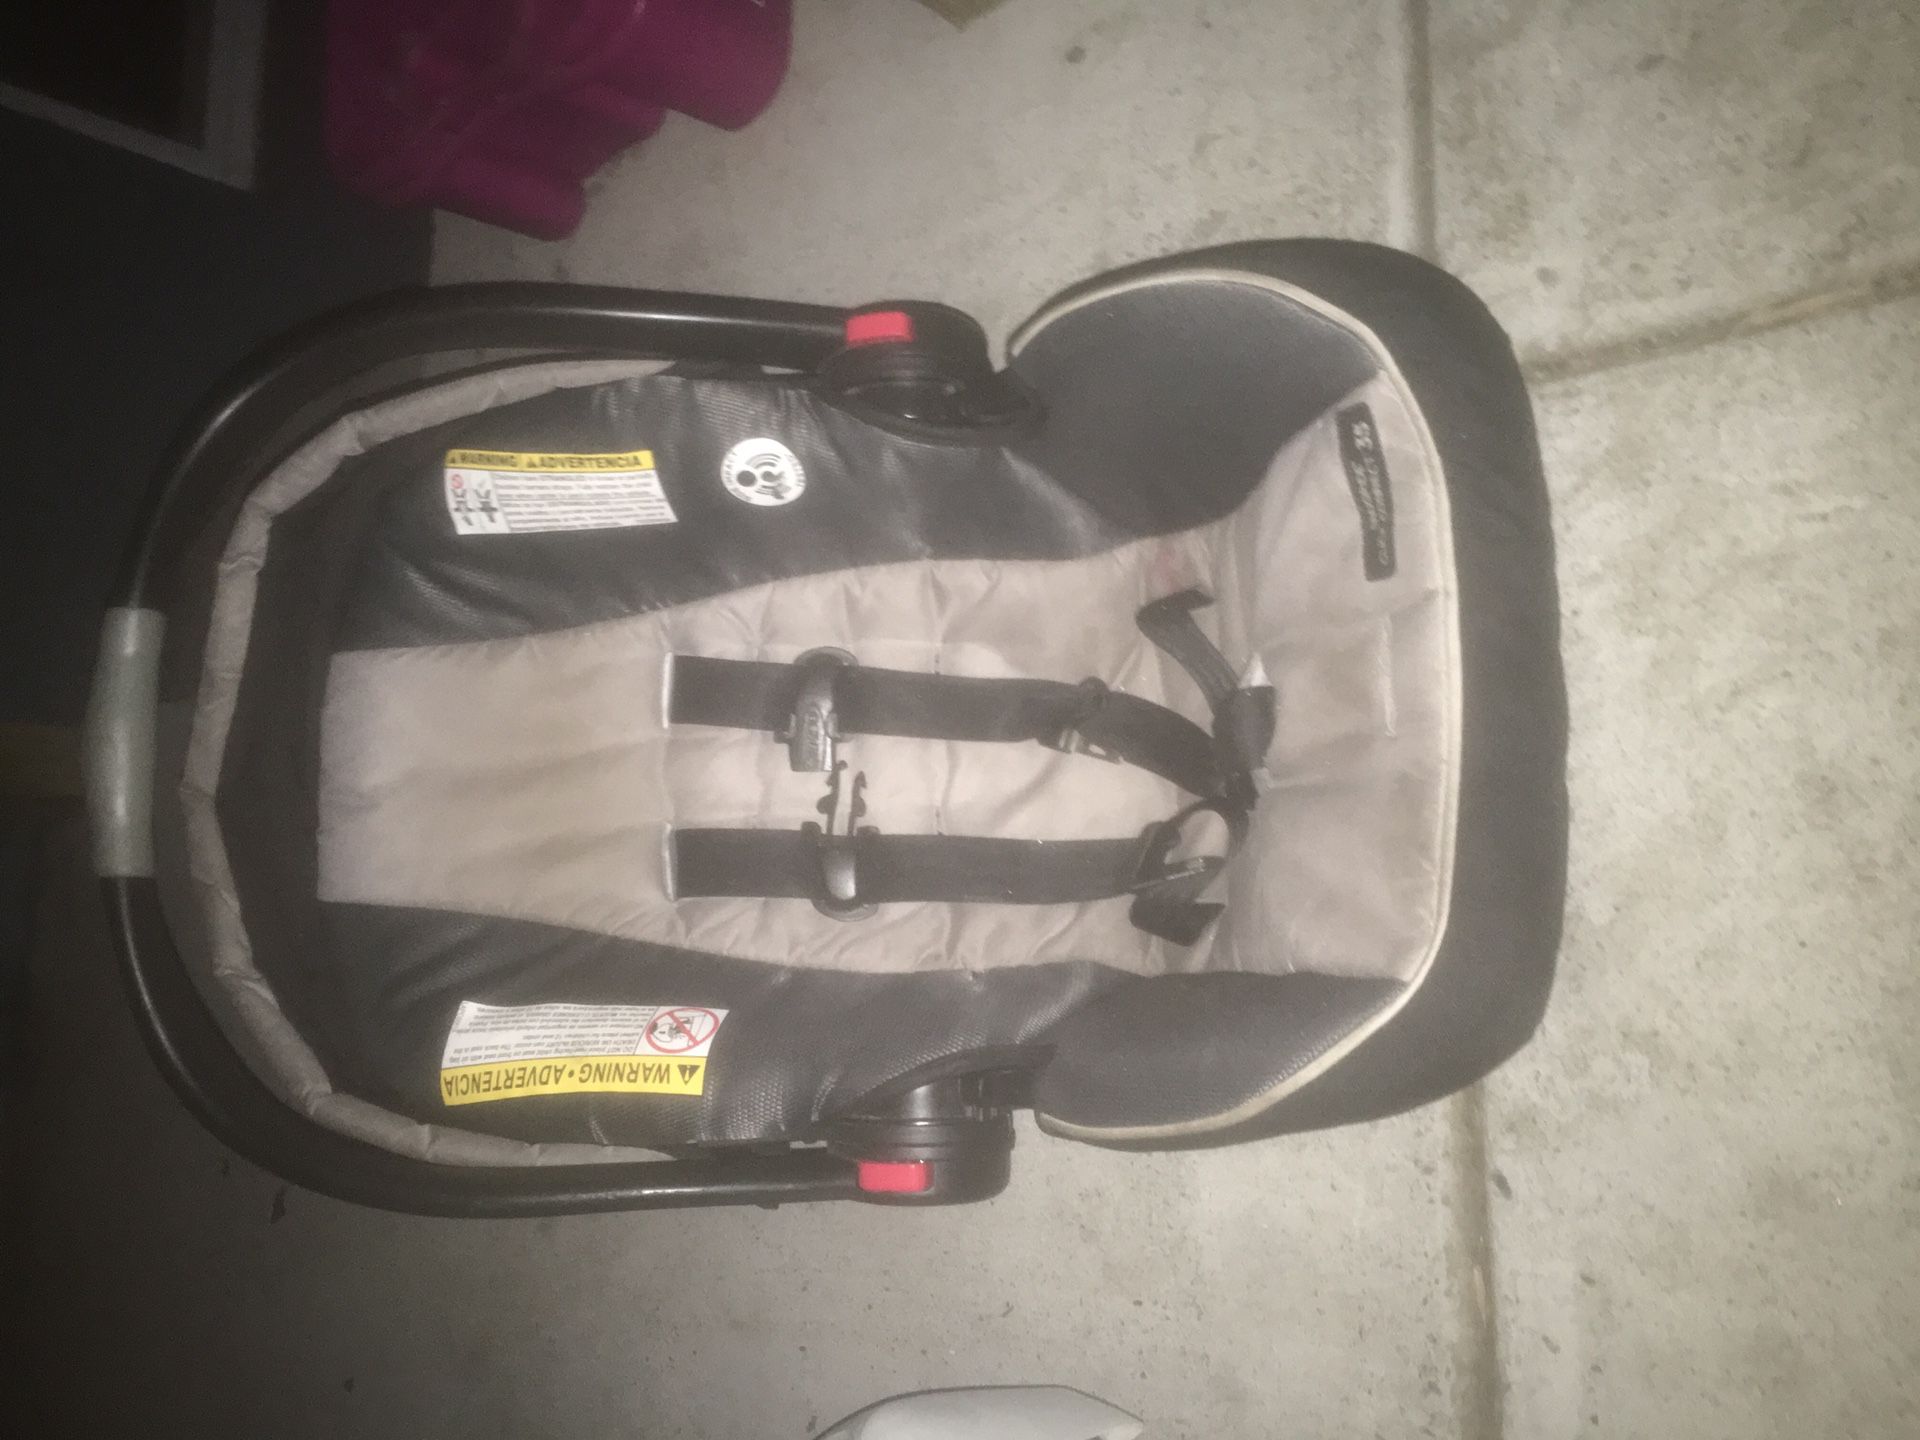 Free Graco infant car seat